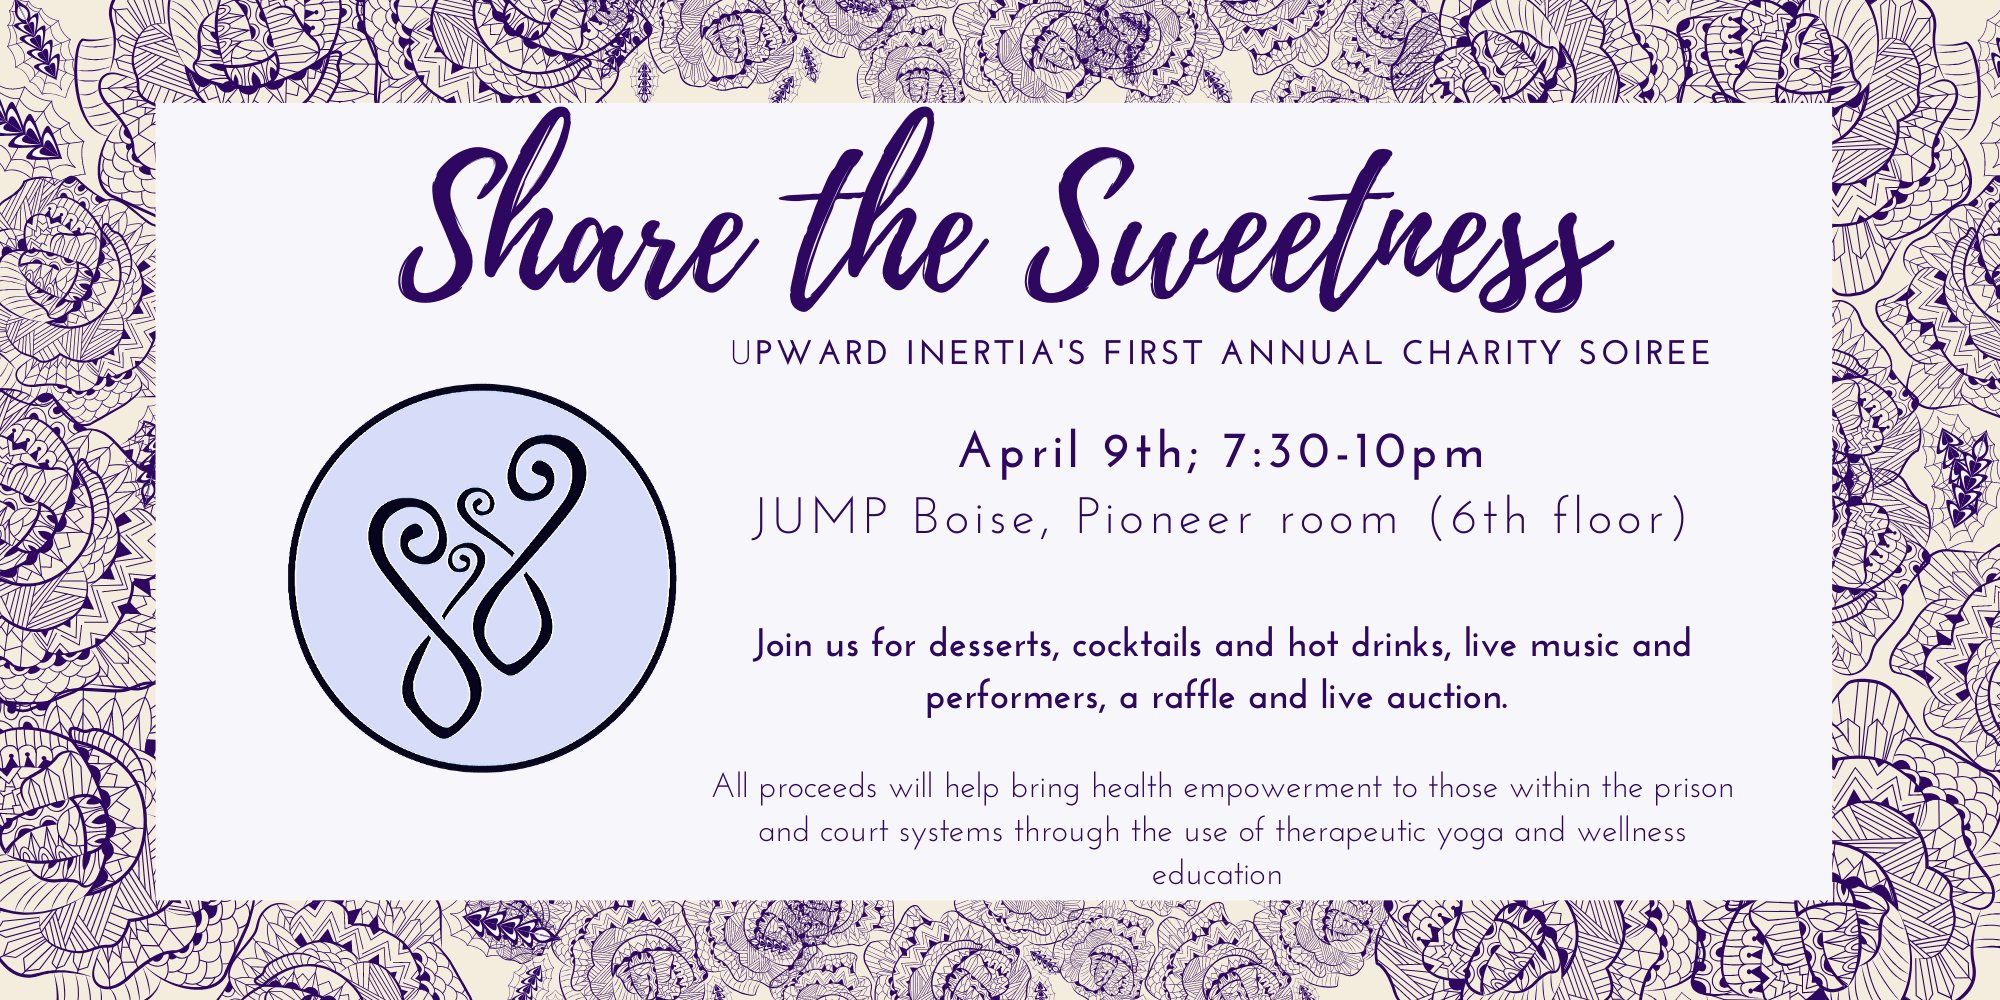 Share the Sweetness: Upward Inertia's First Annual Charity Soiree